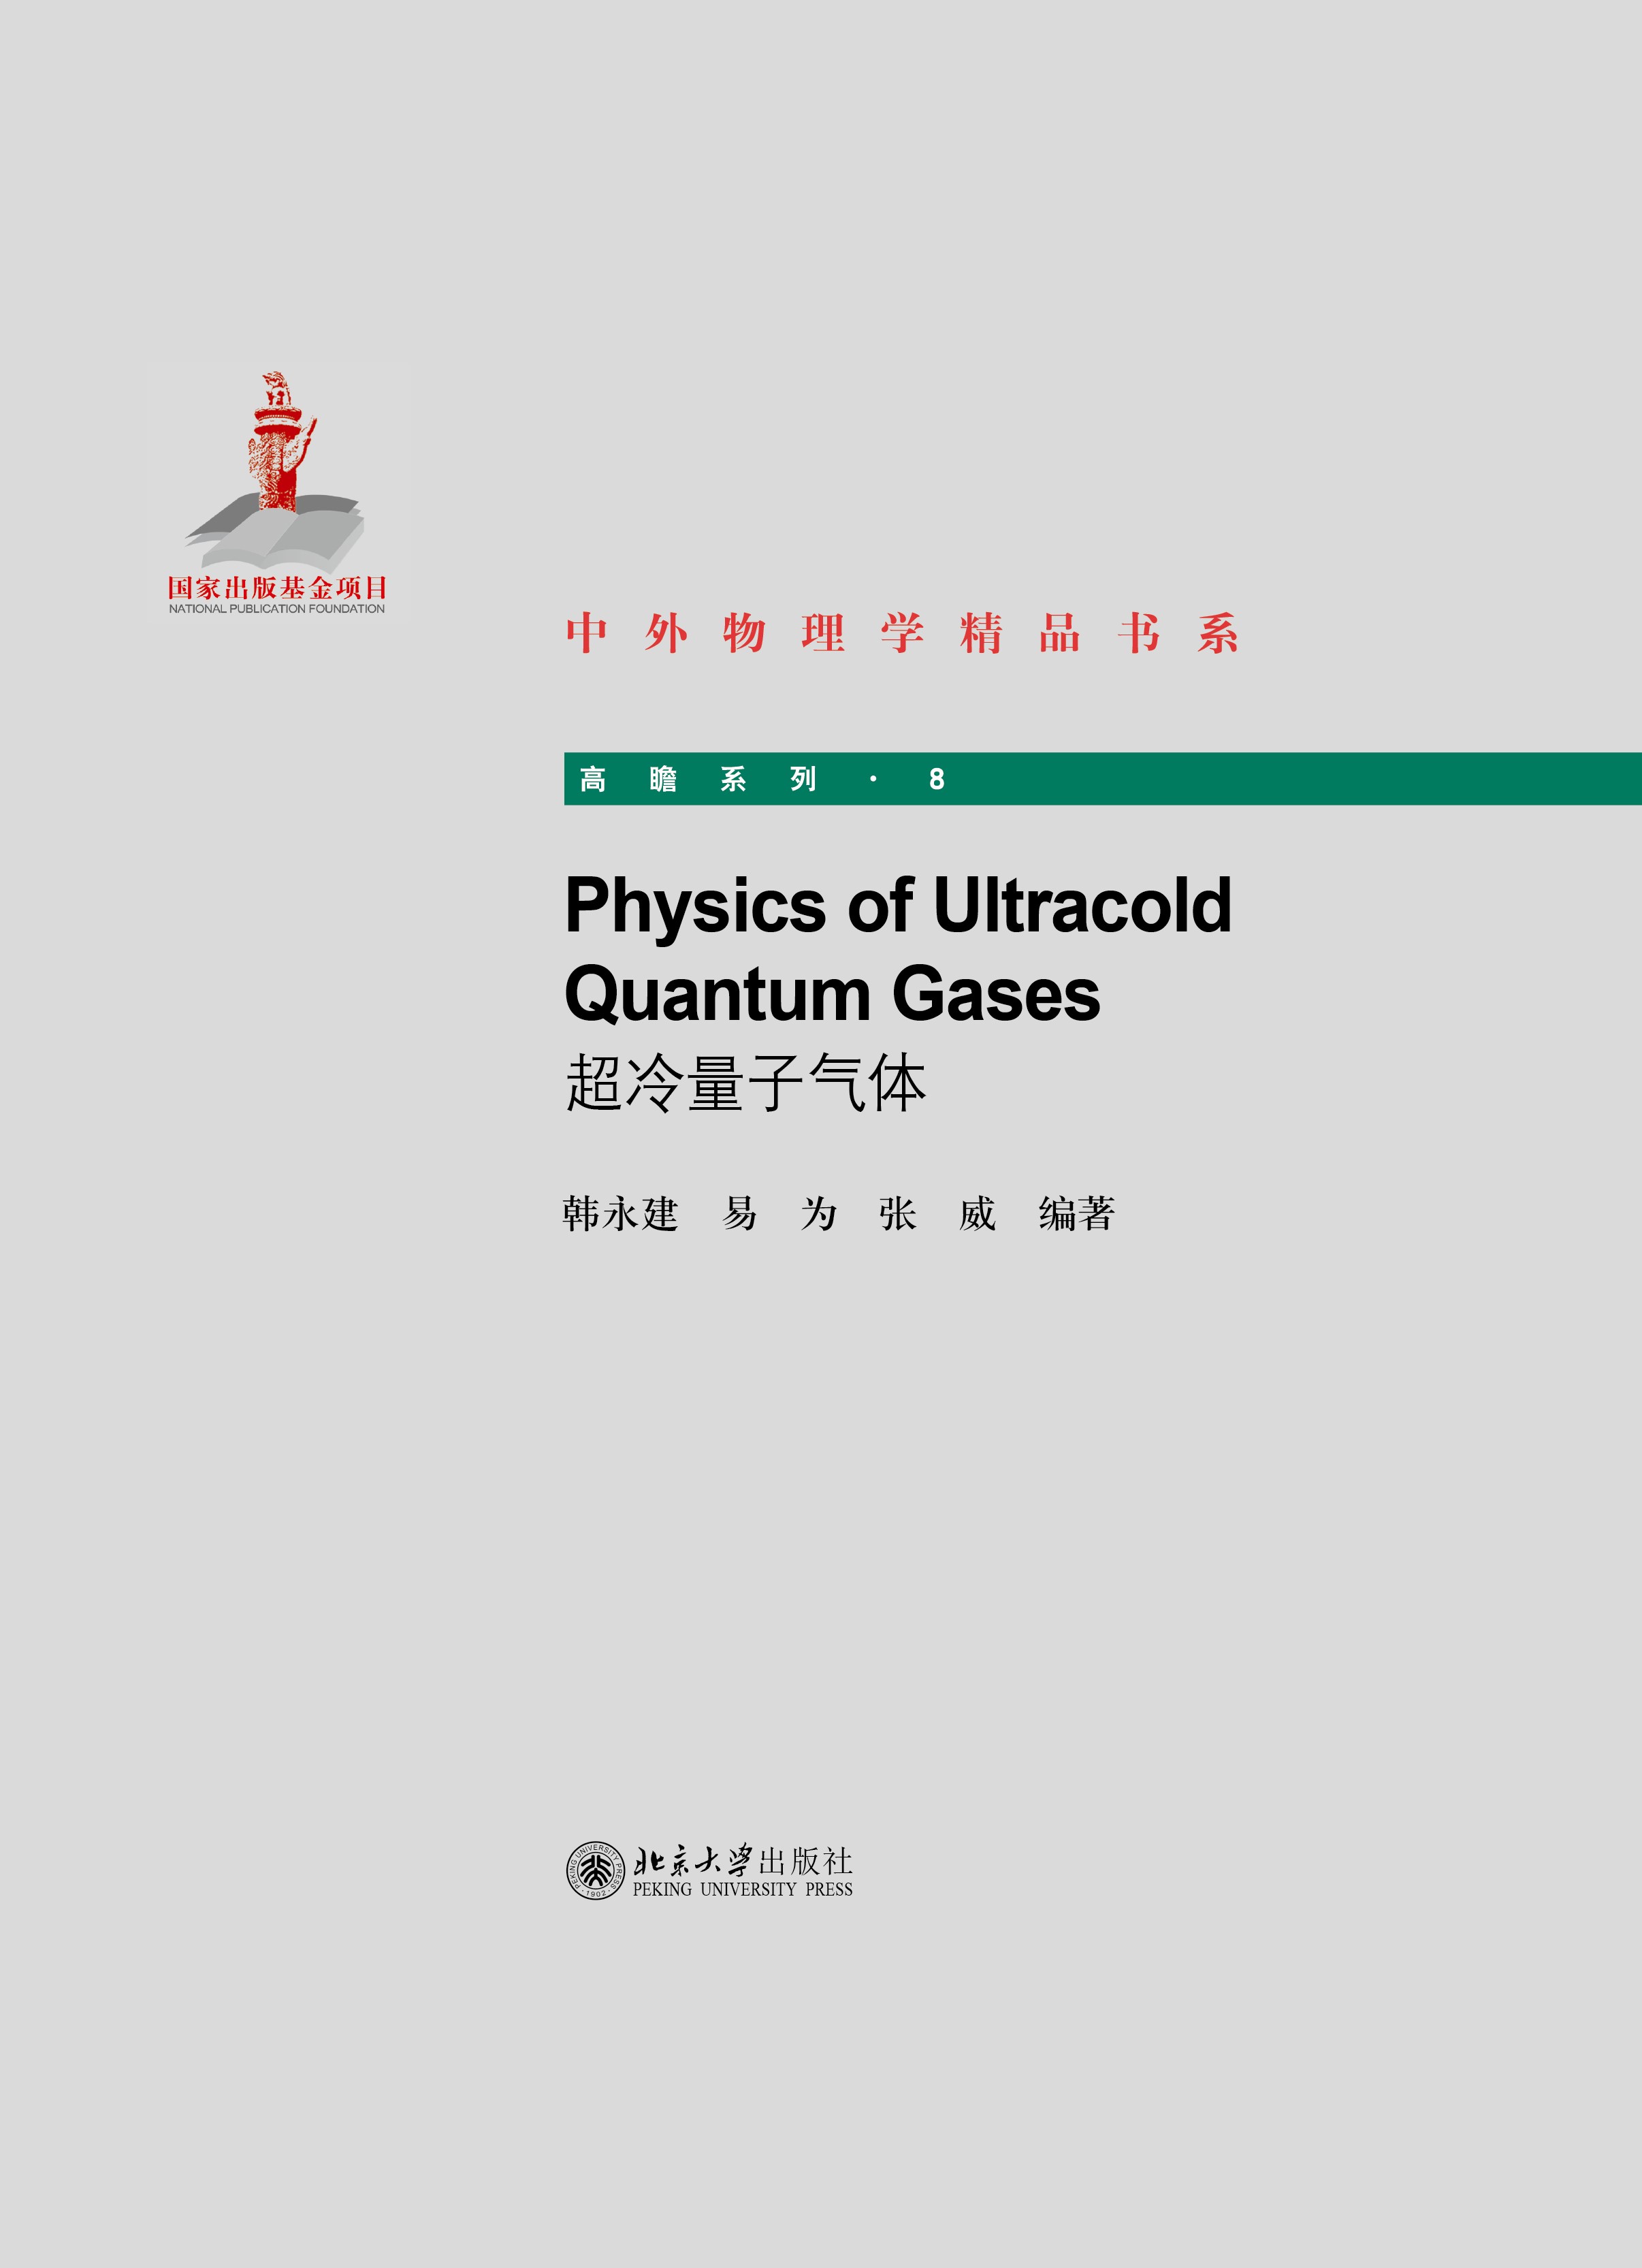 Physics of Ultracold Quantum Gases(超冷量子气体)